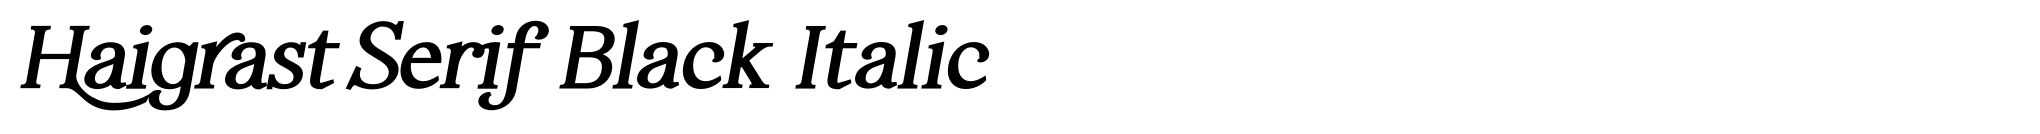 Haigrast Serif Black Italic image